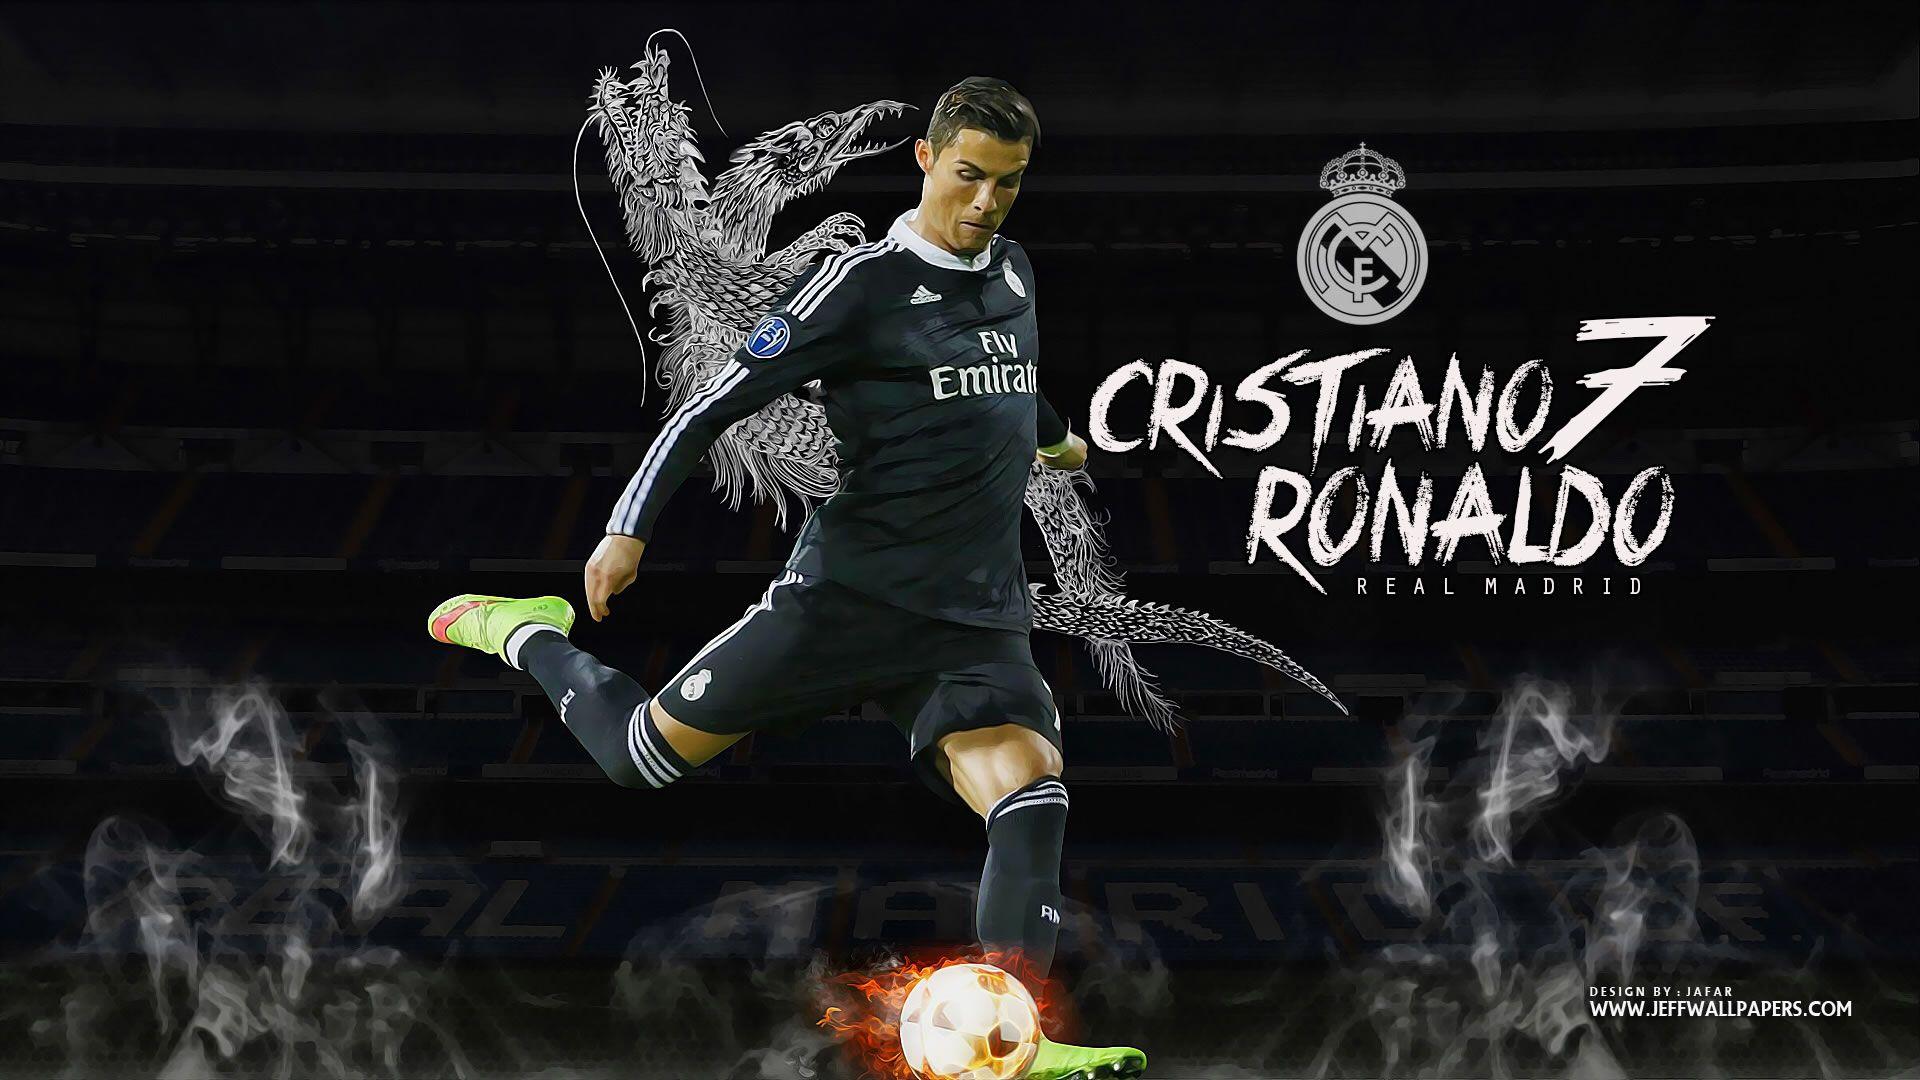 Cristiano Ronaldo Real Madrid wallpaper